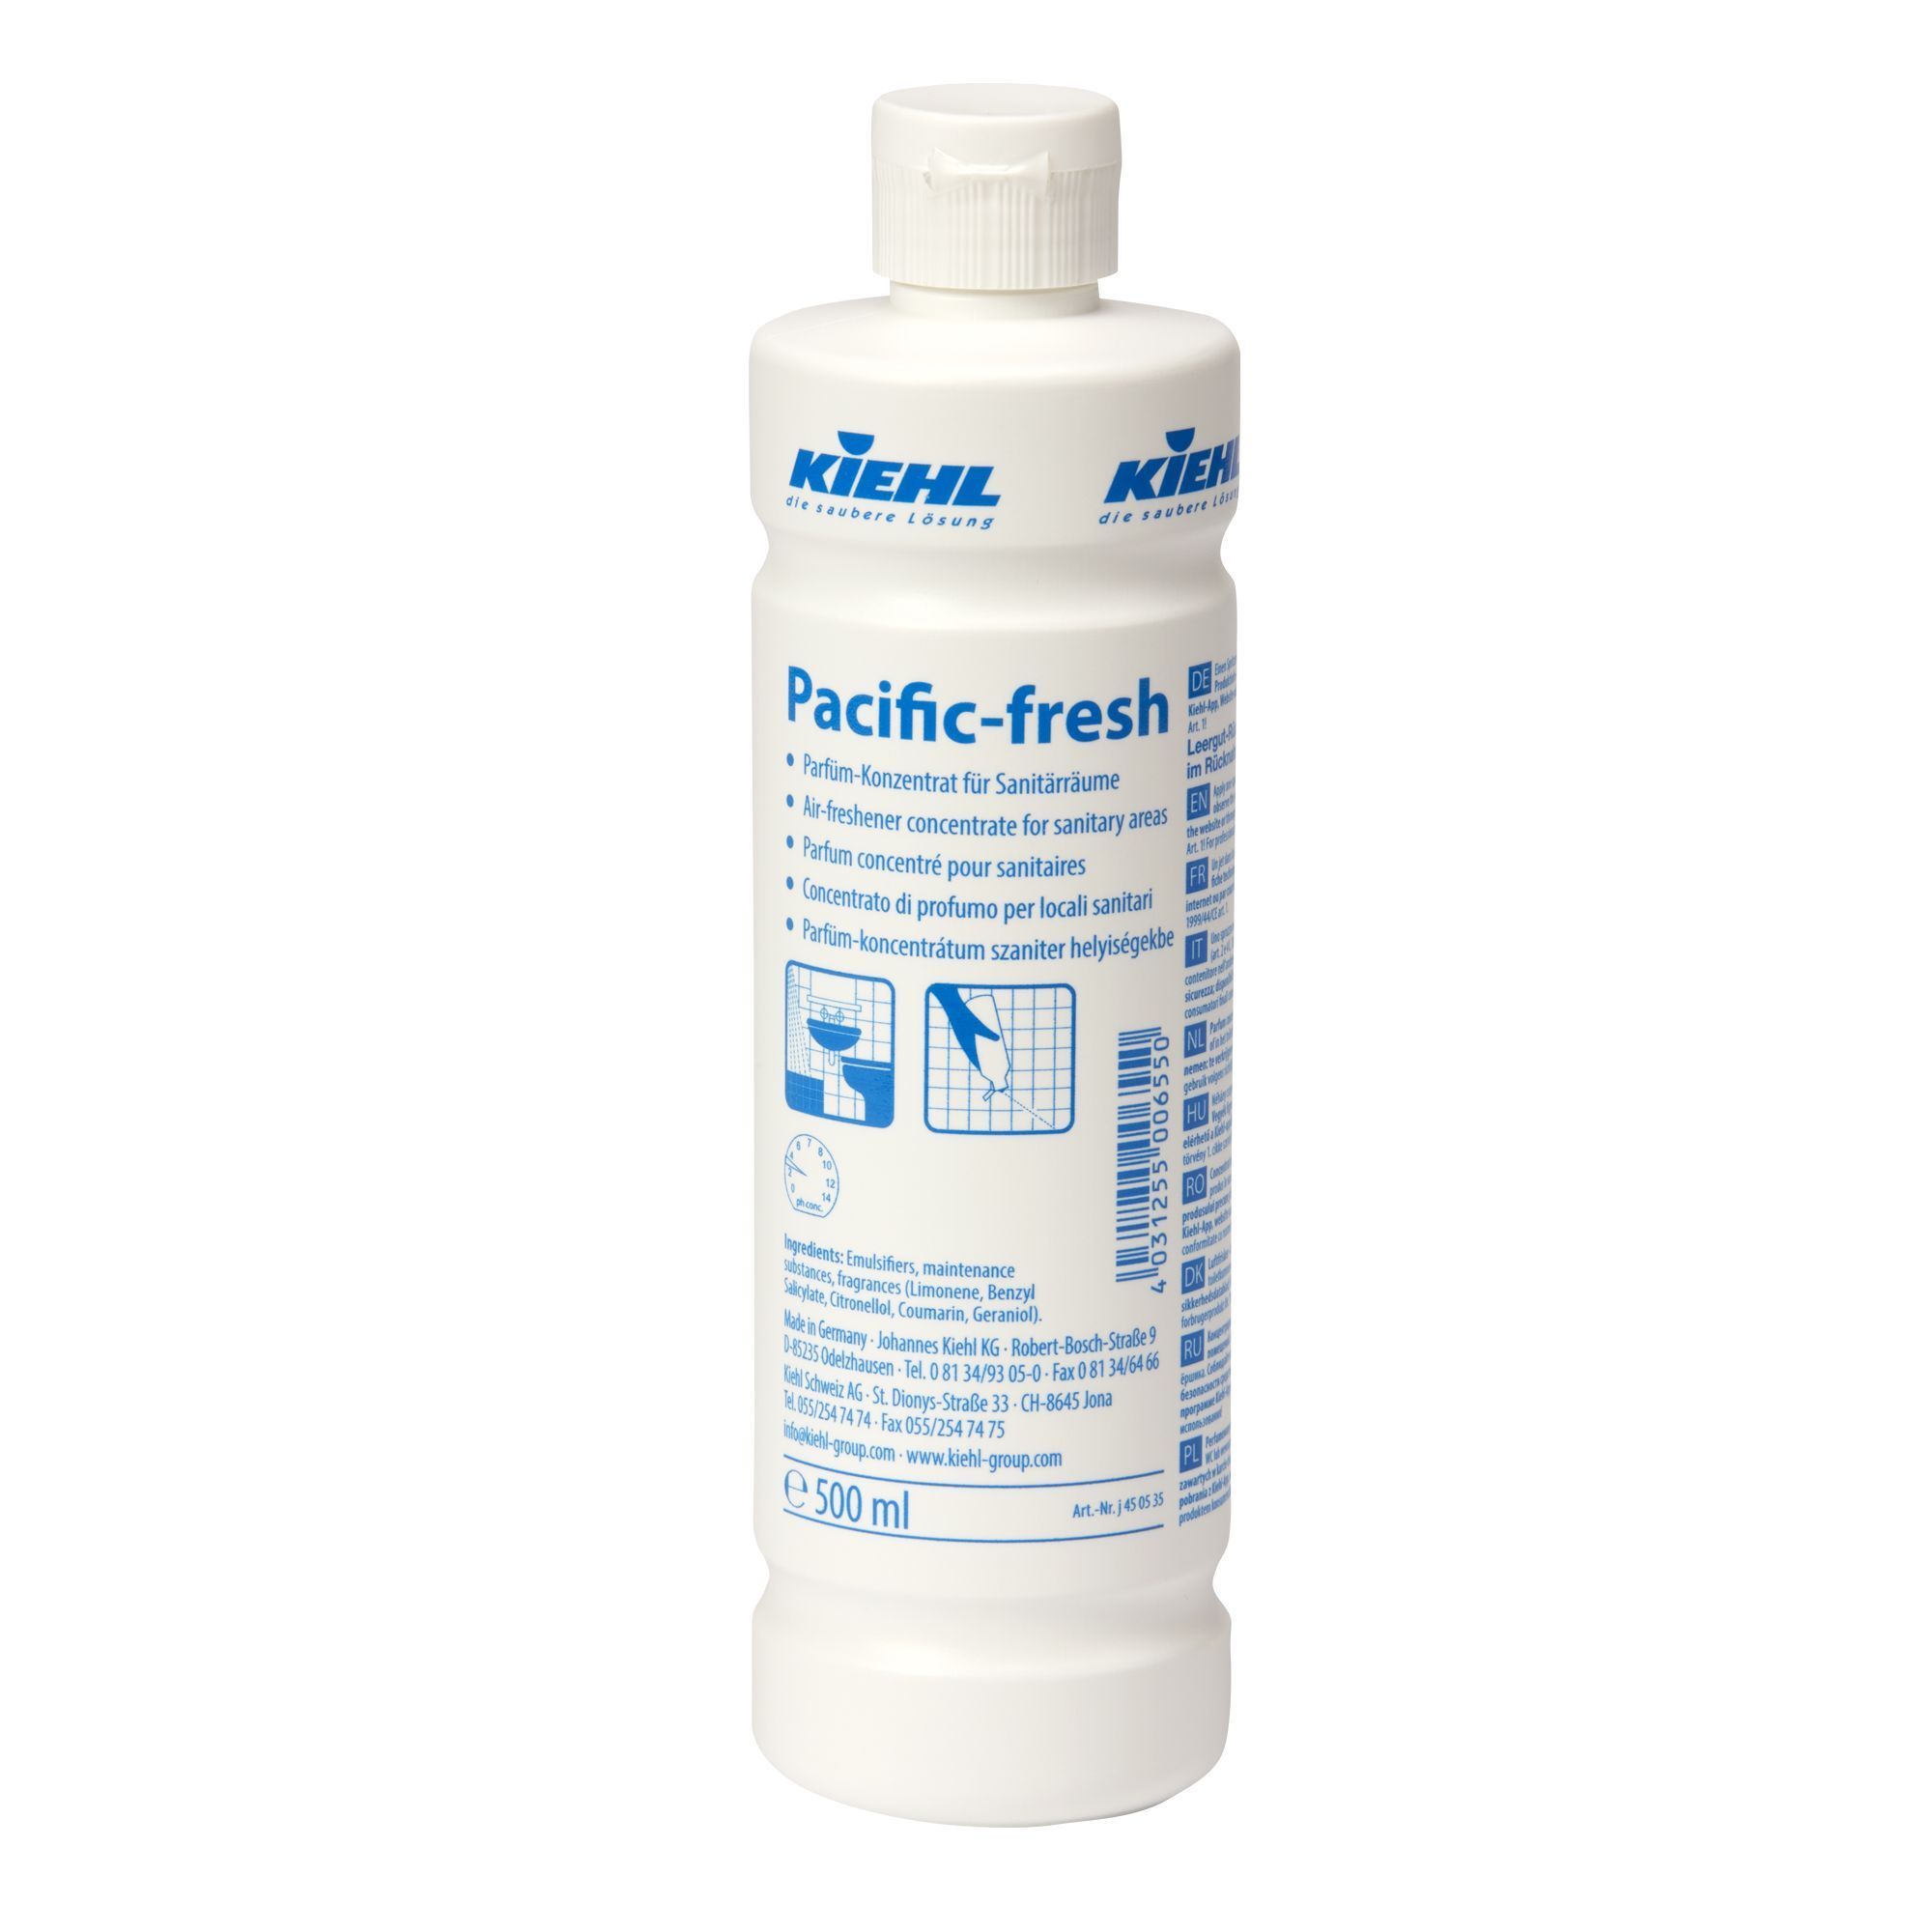 Kiehl Pacific-fresh, Parfüm-Konzentrat für Sanitärräume